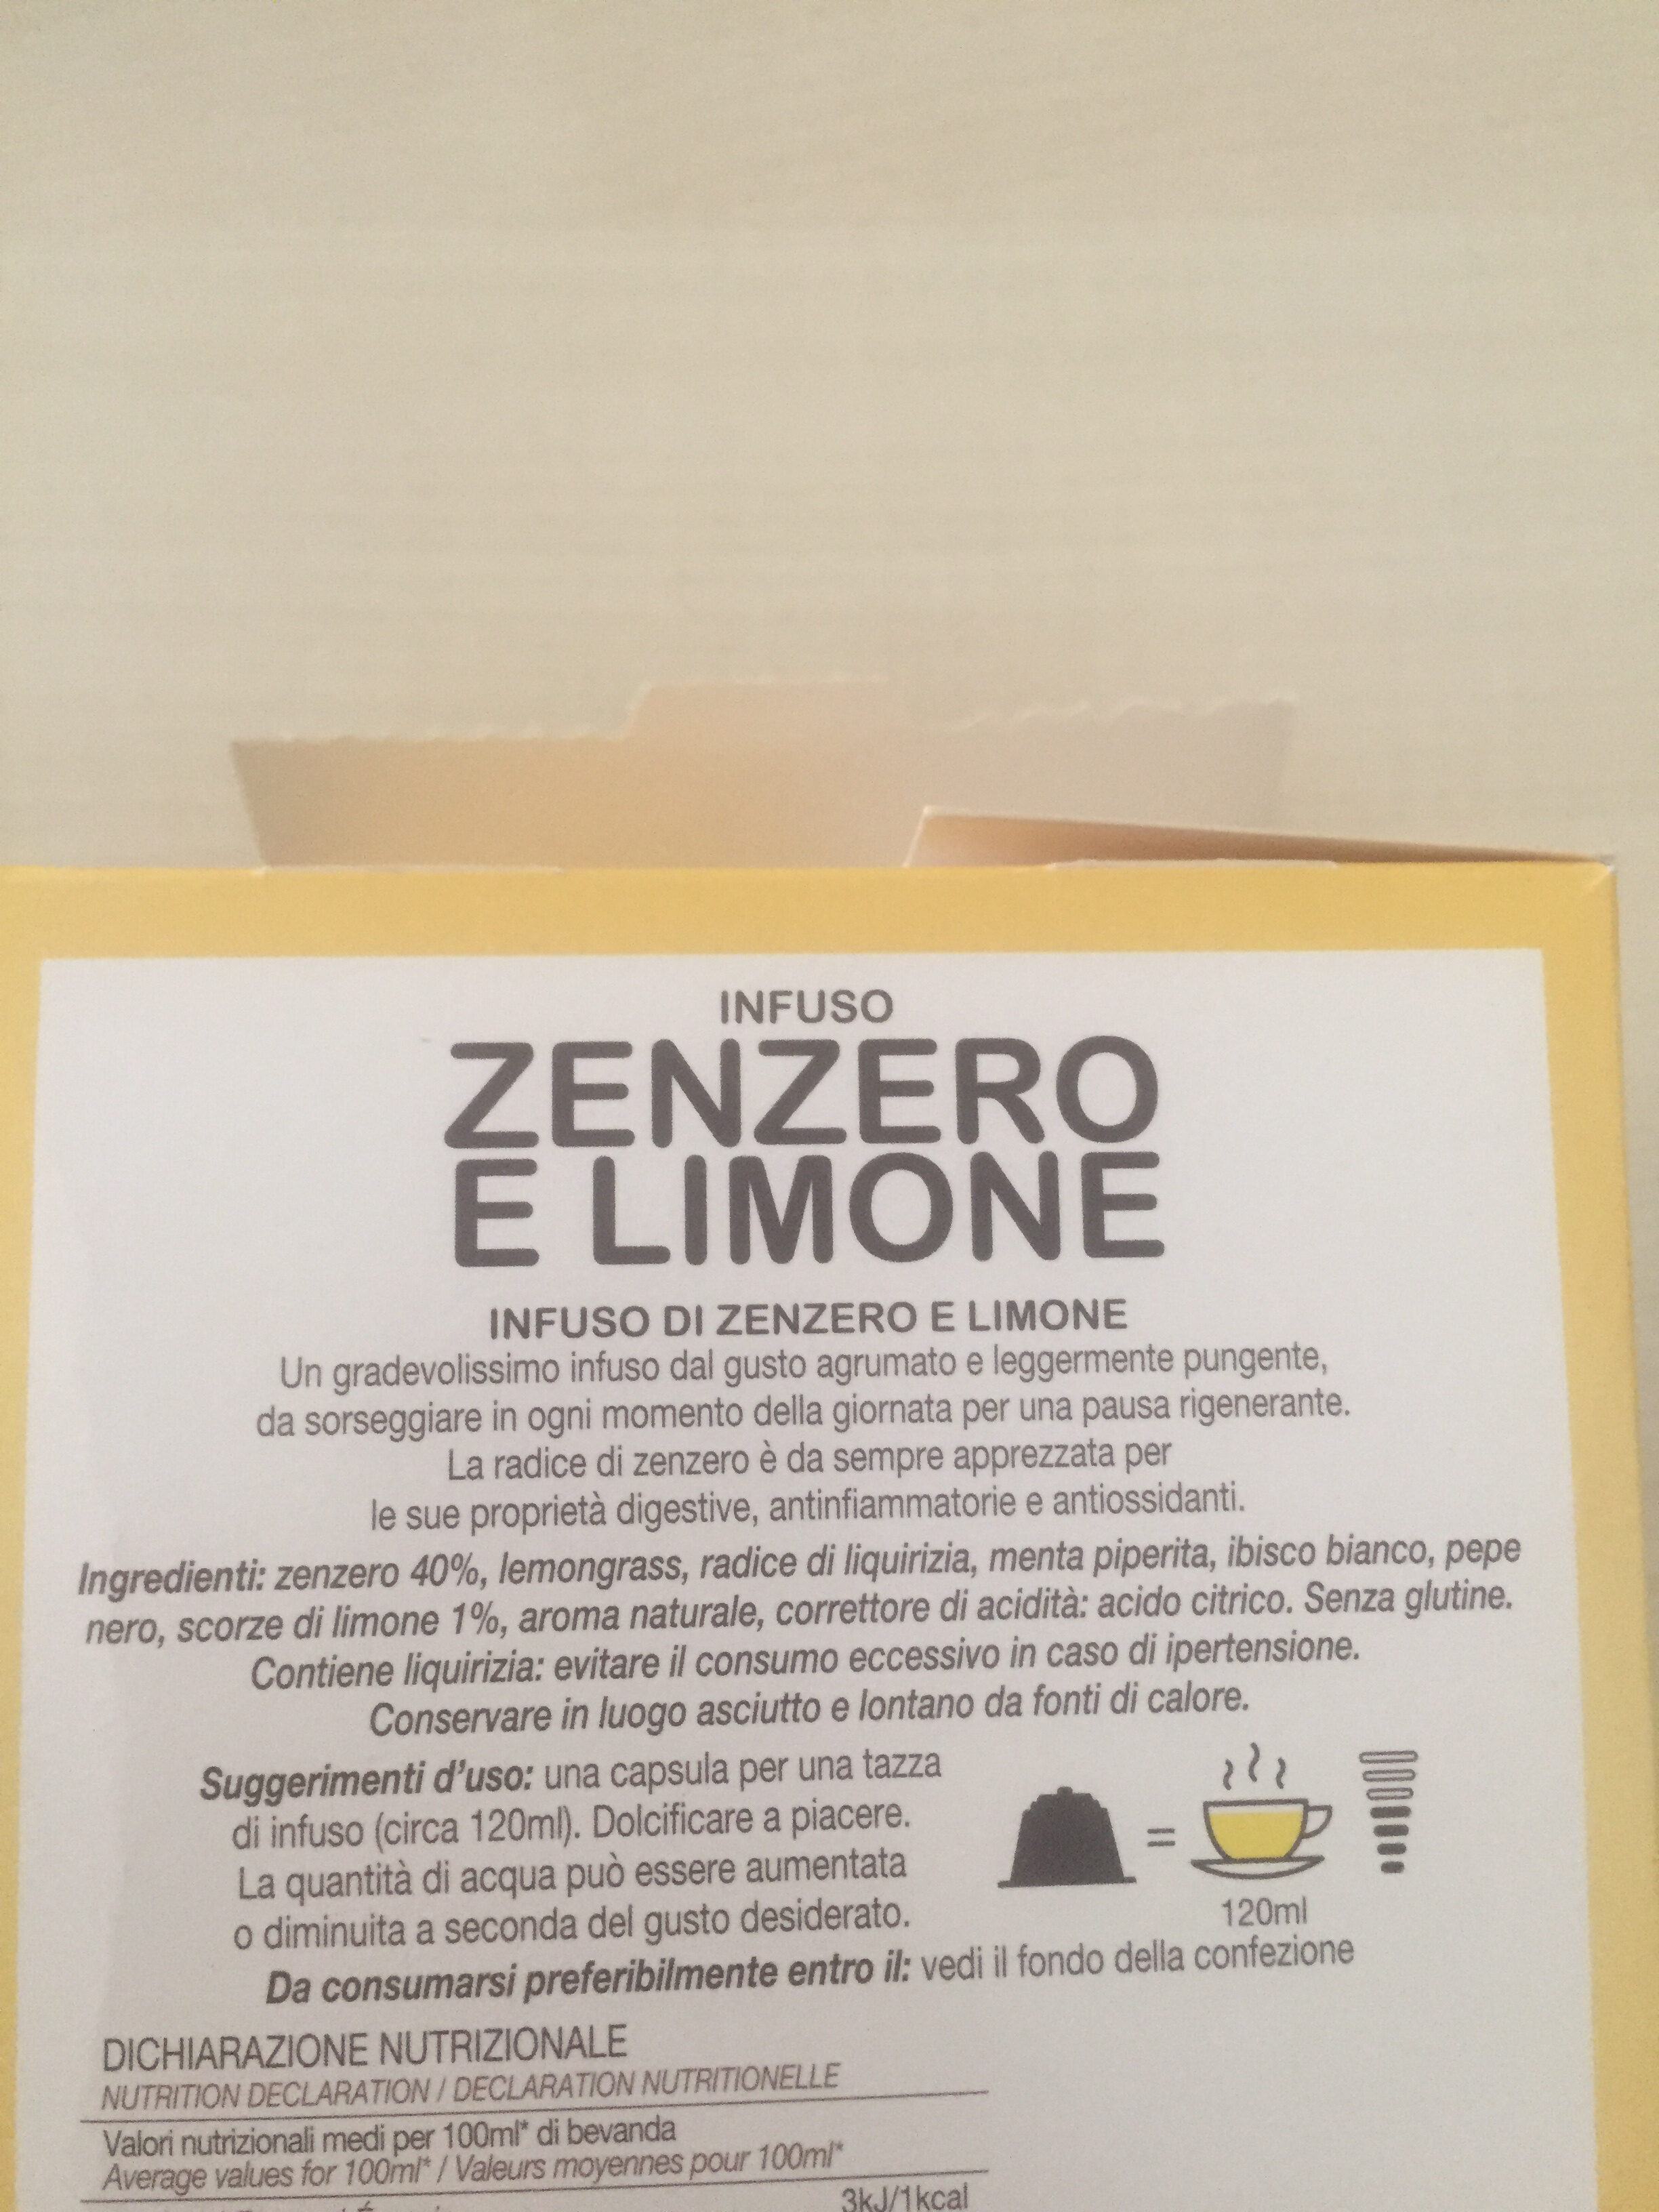 Infuso zenzero e limone - المكونات - it